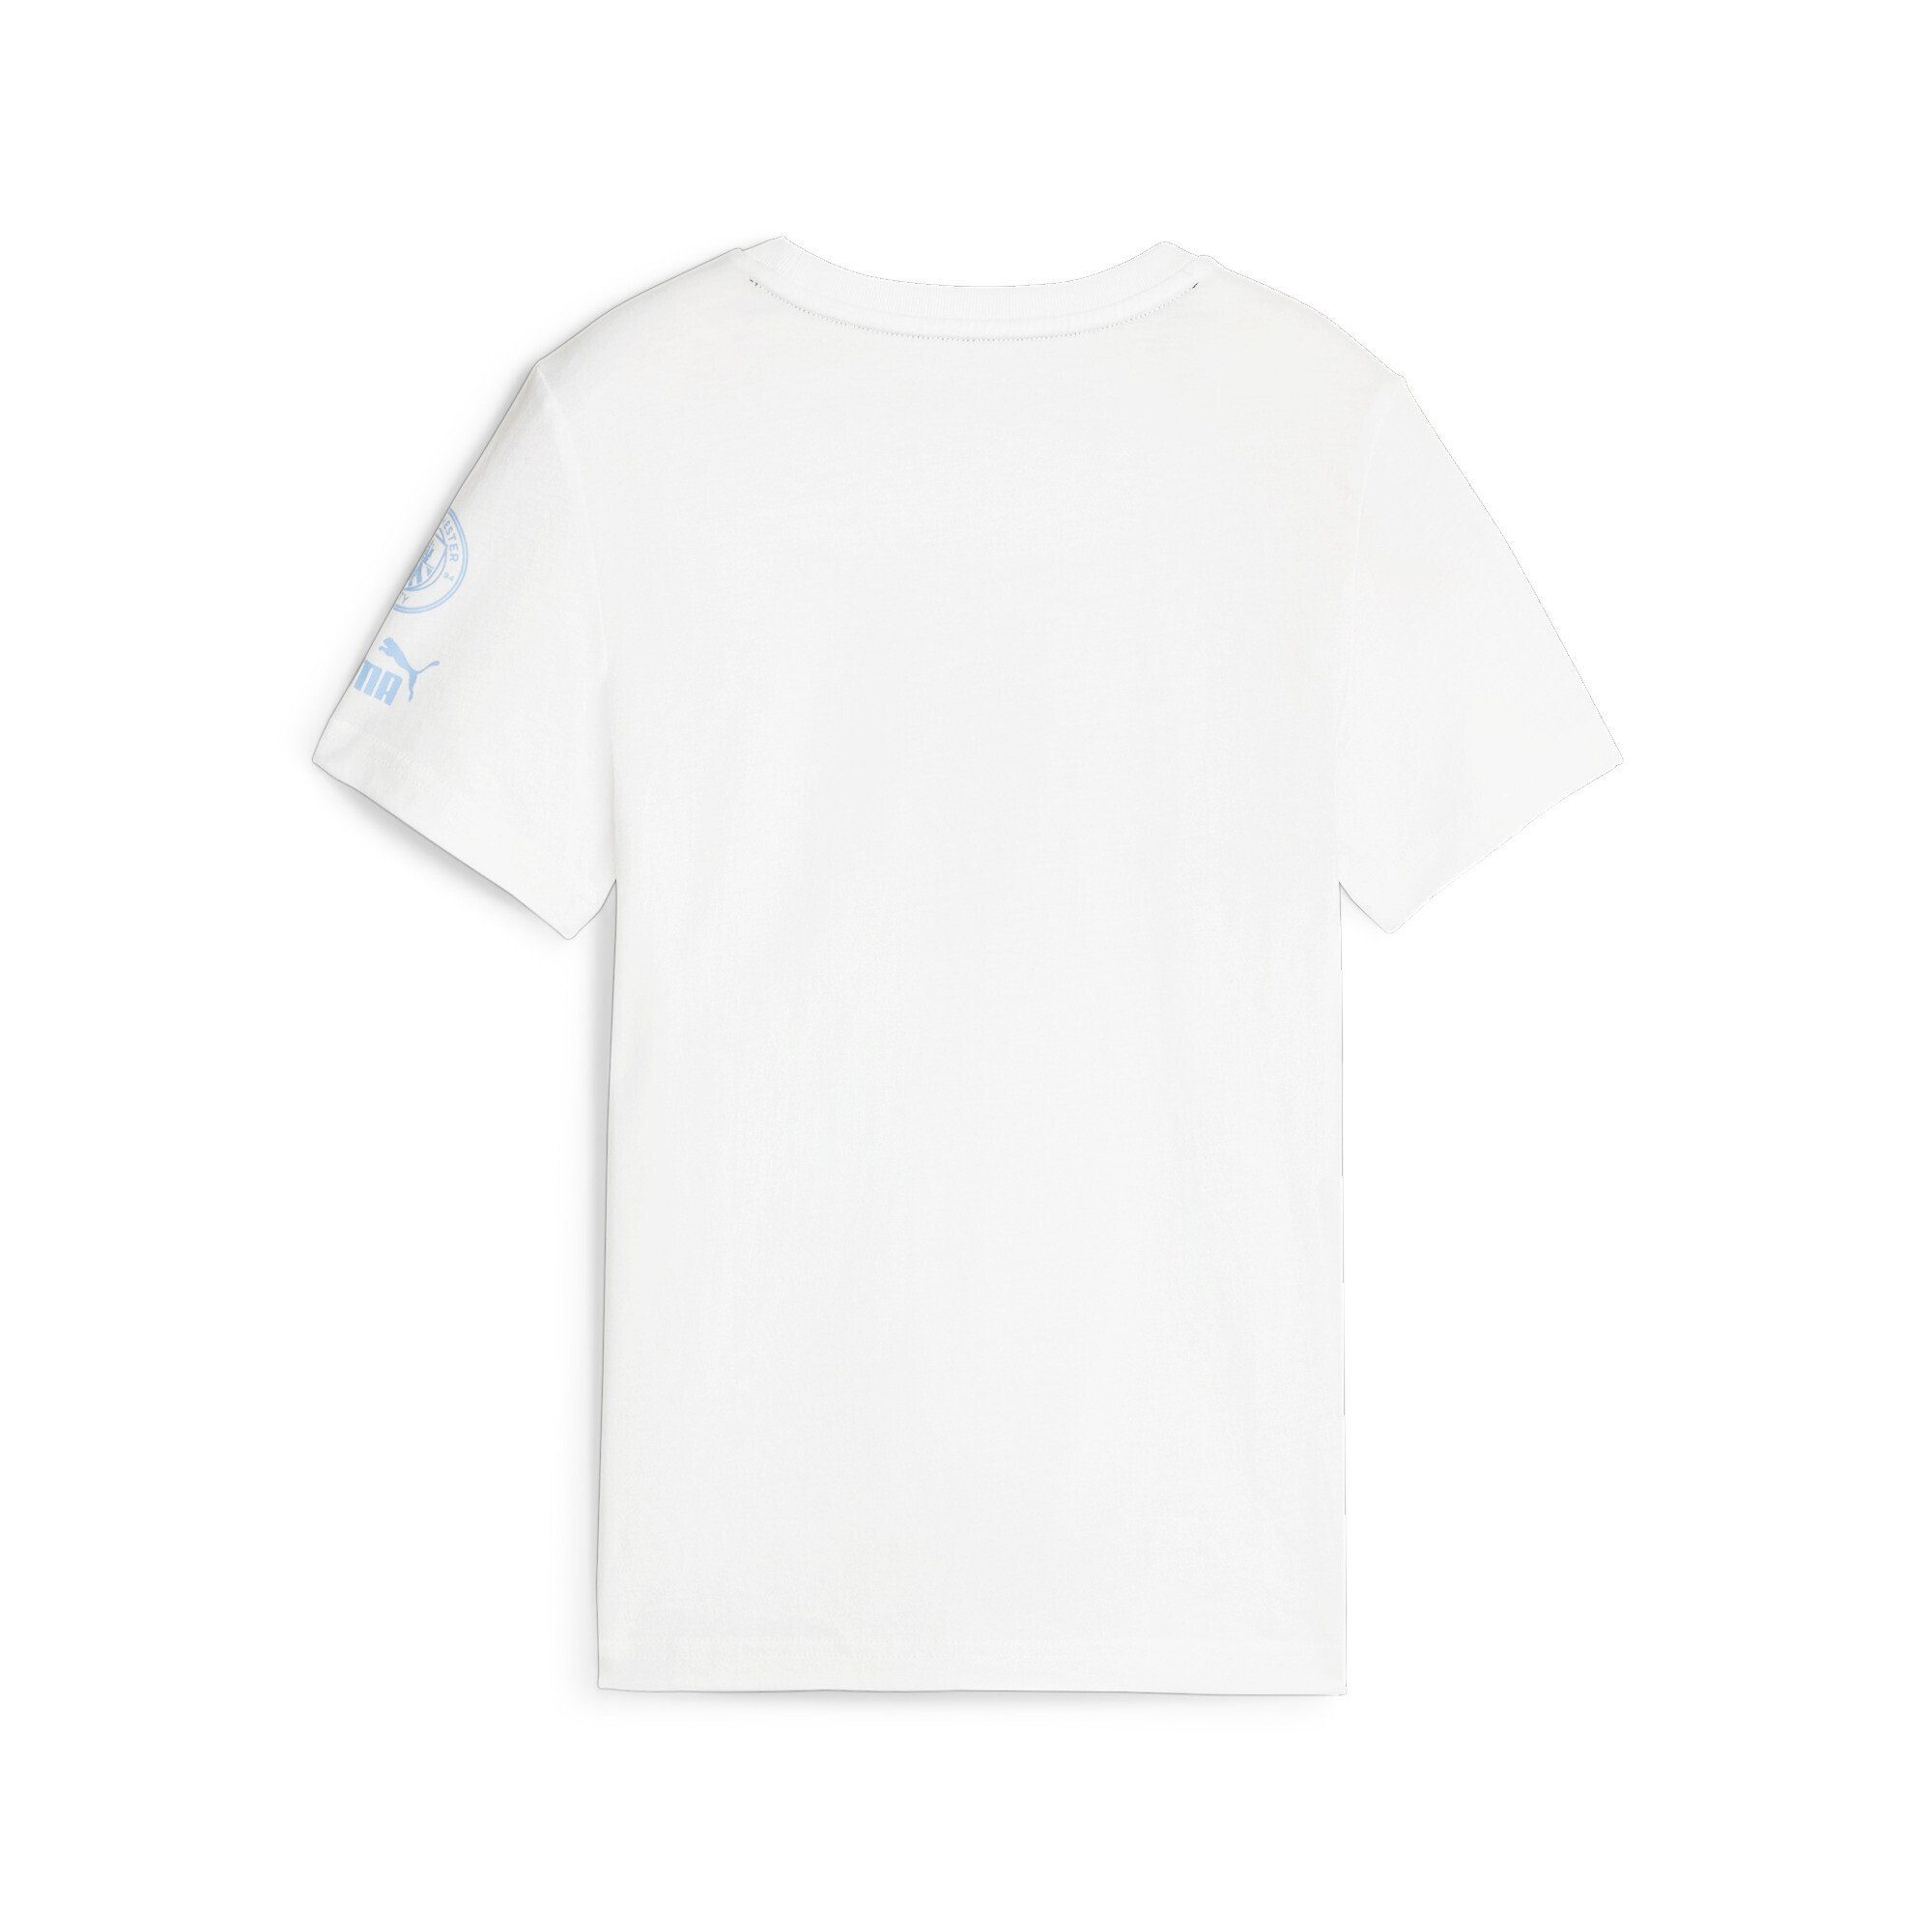 Blue FtblCore Graphic White Jugendliche City T-Shirt PUMA Light T-Shirt Team Manchester